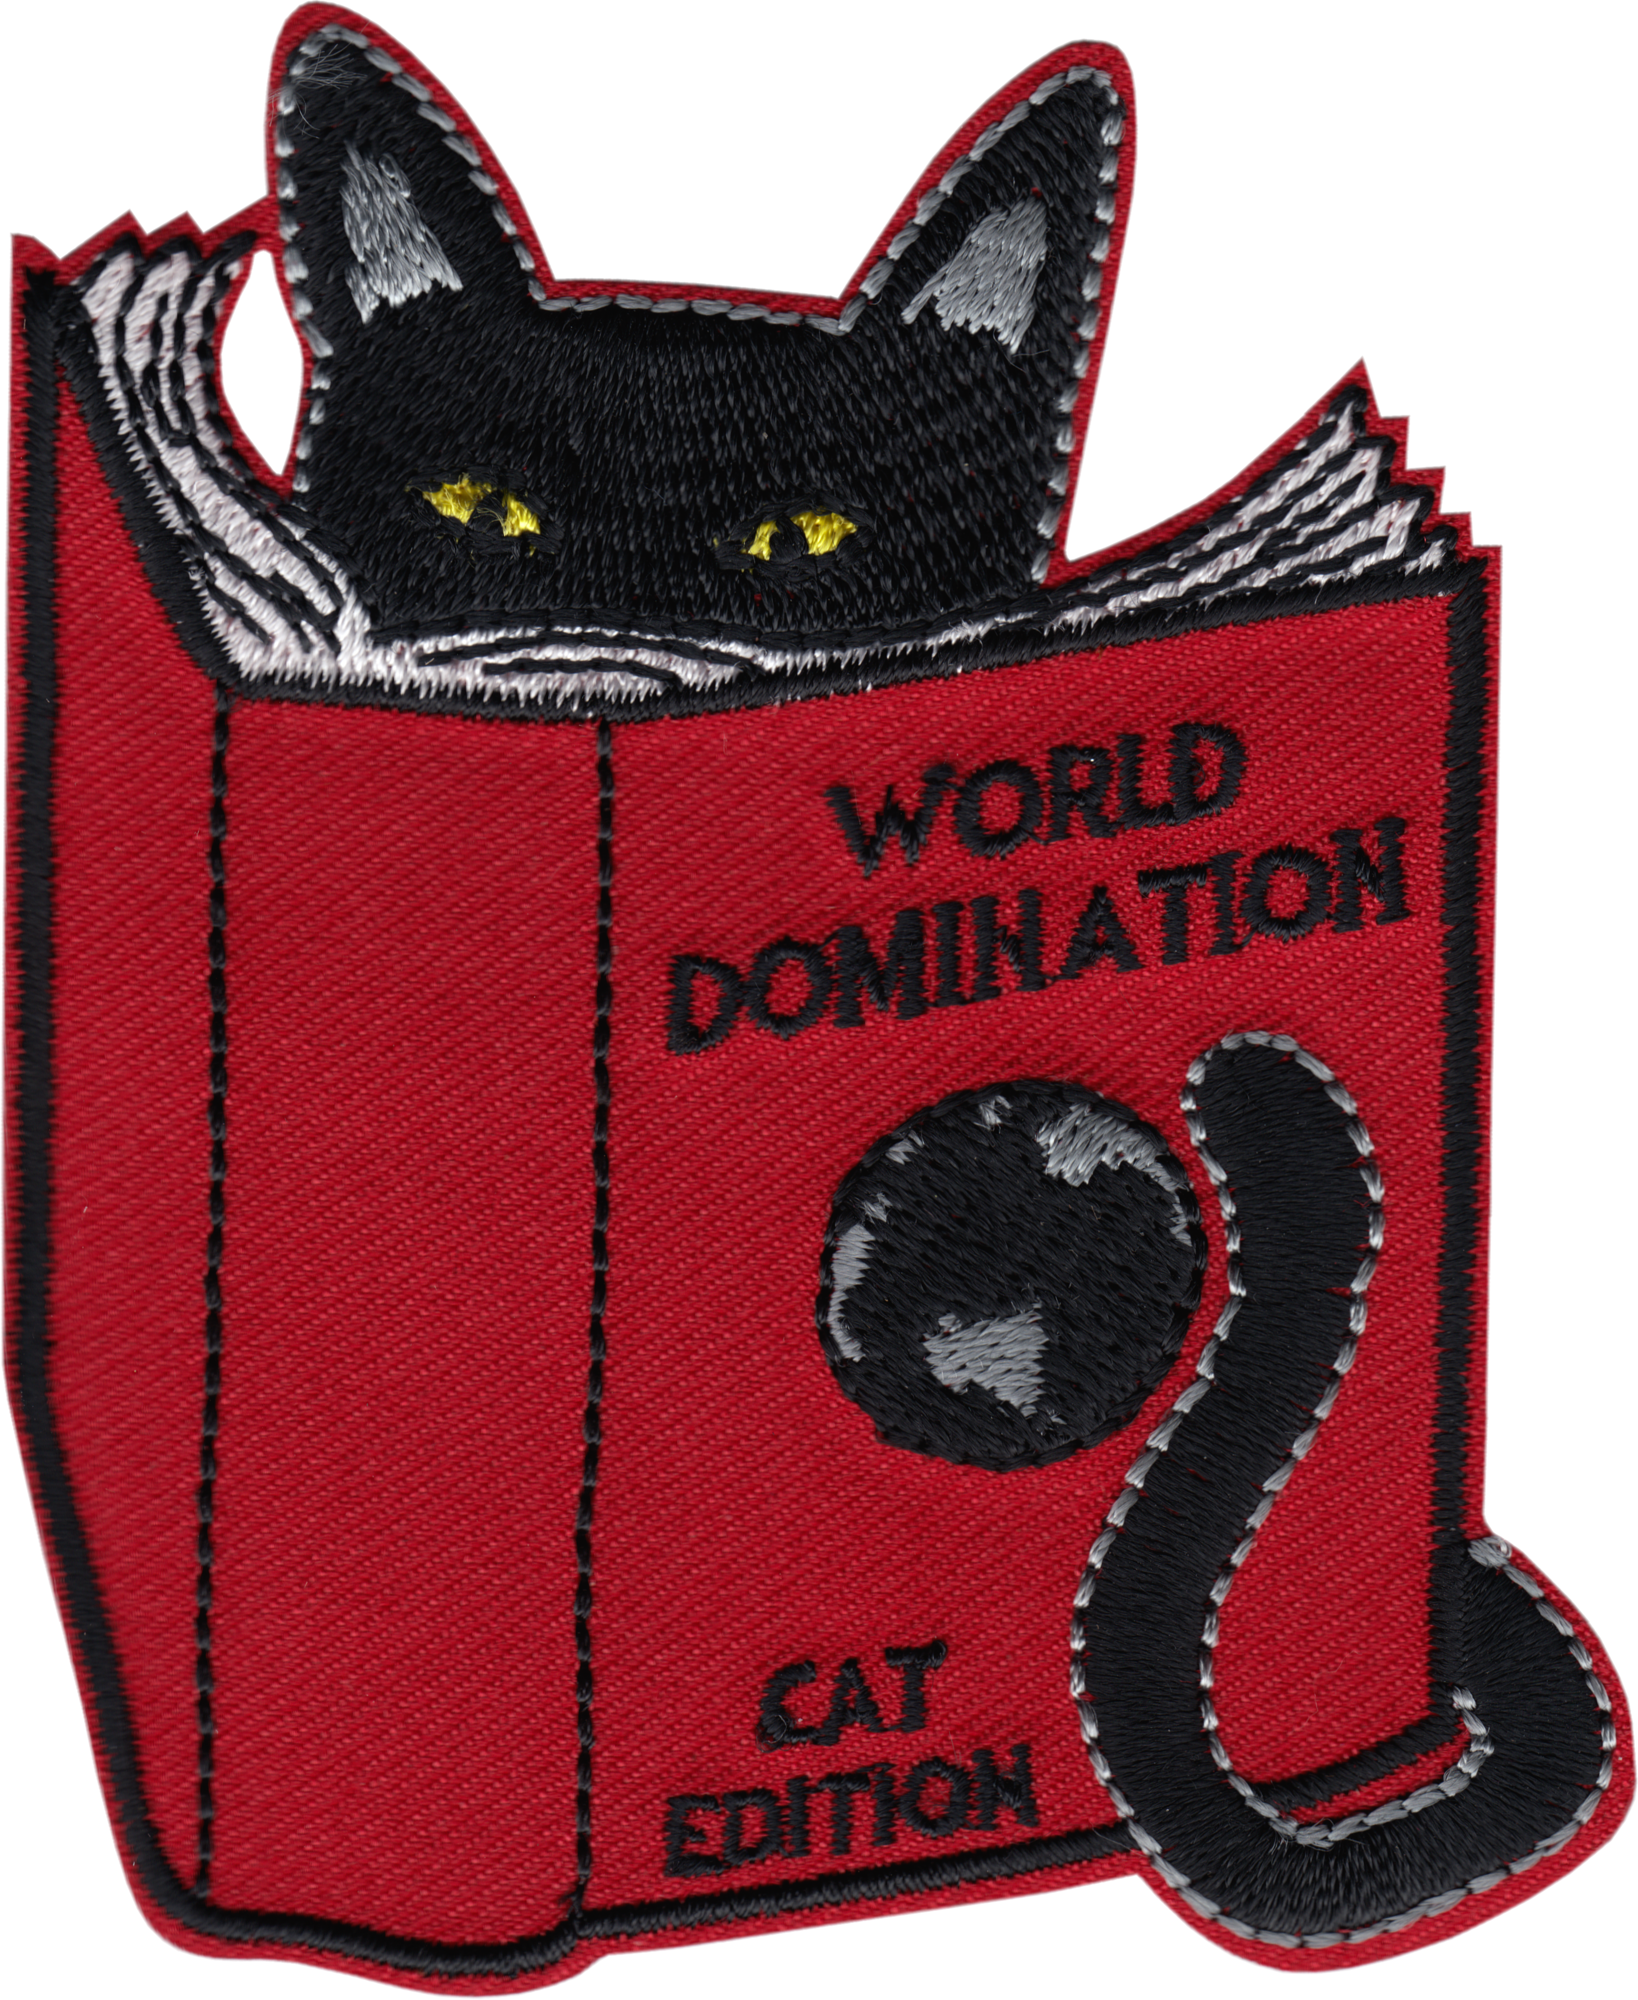 Patch - Black Cat Reading World Domination